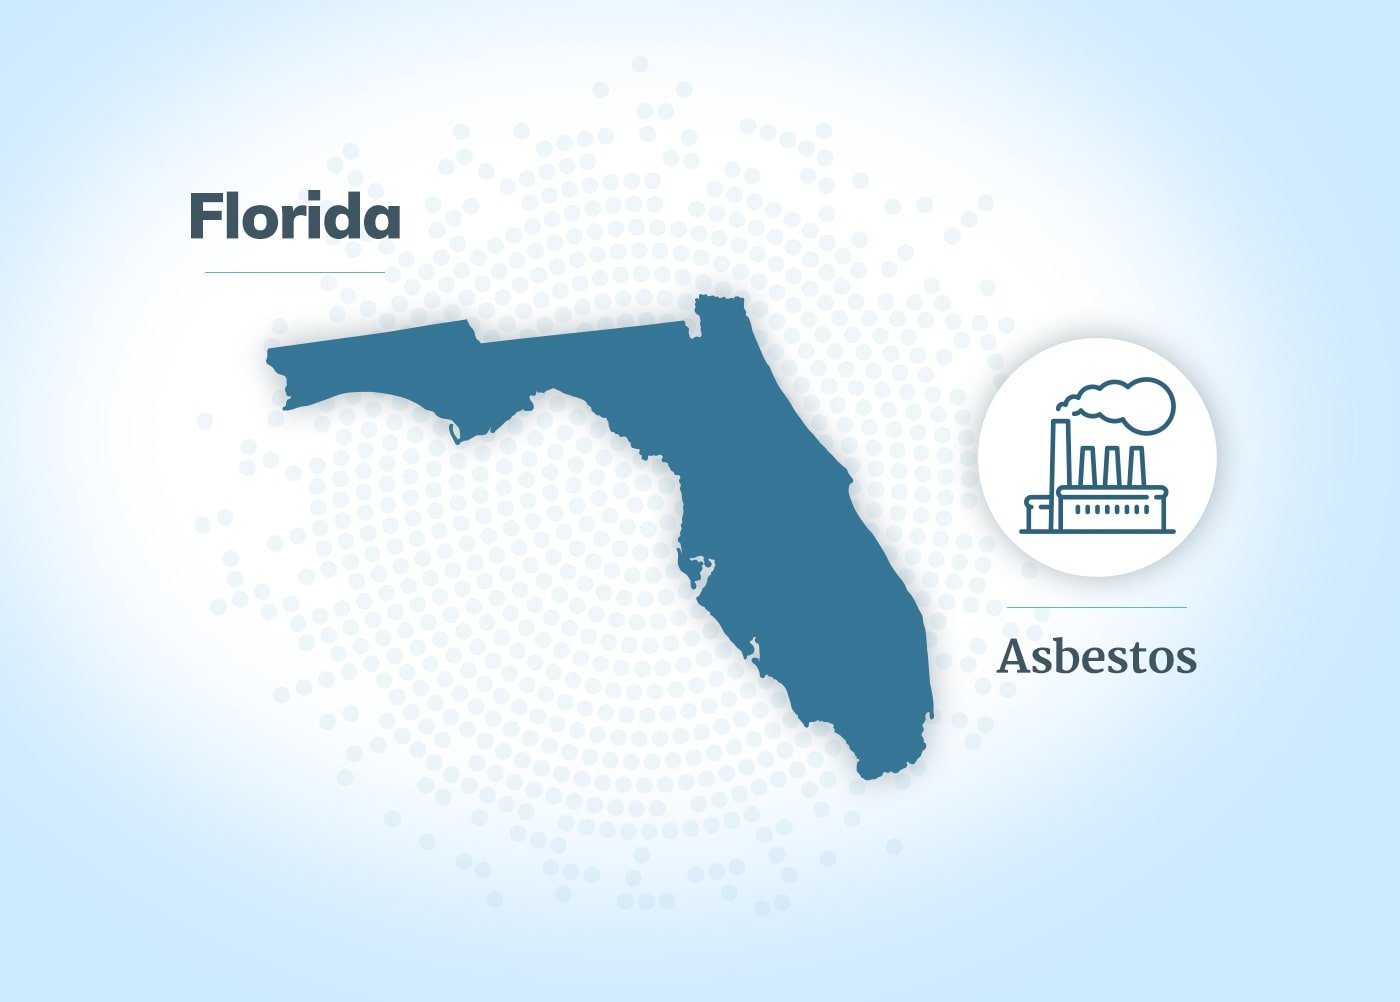 Asbestos exposure in Florida